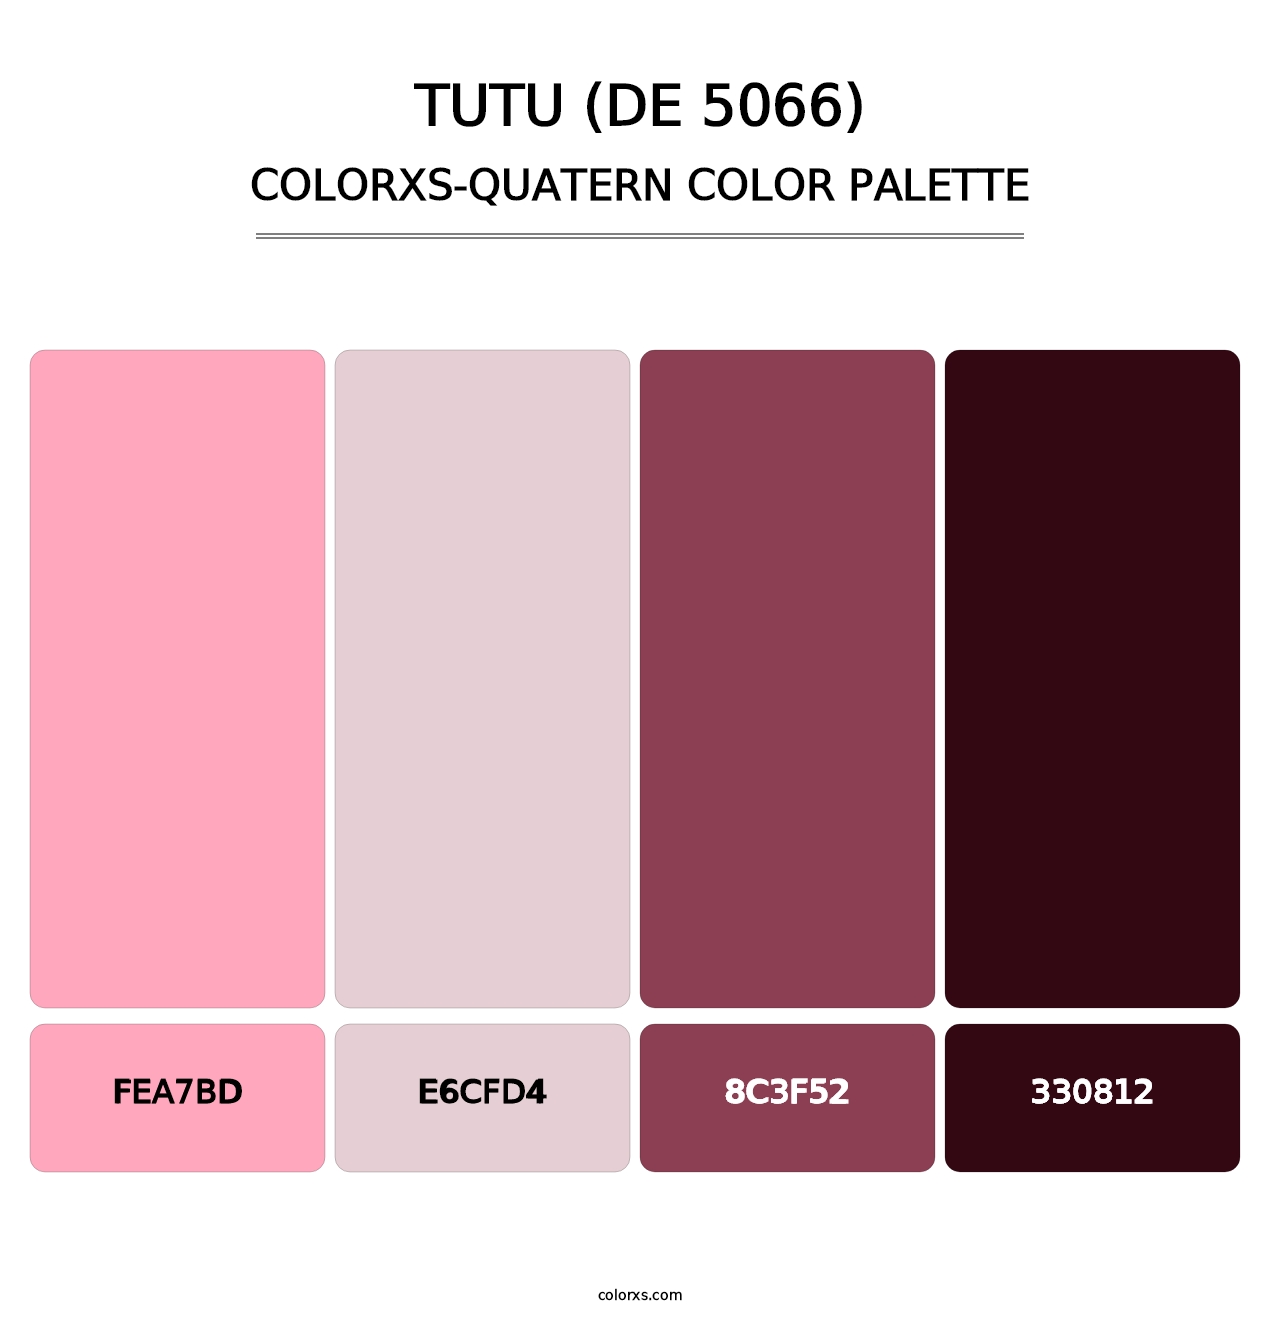 Tutu (DE 5066) - Colorxs Quatern Palette